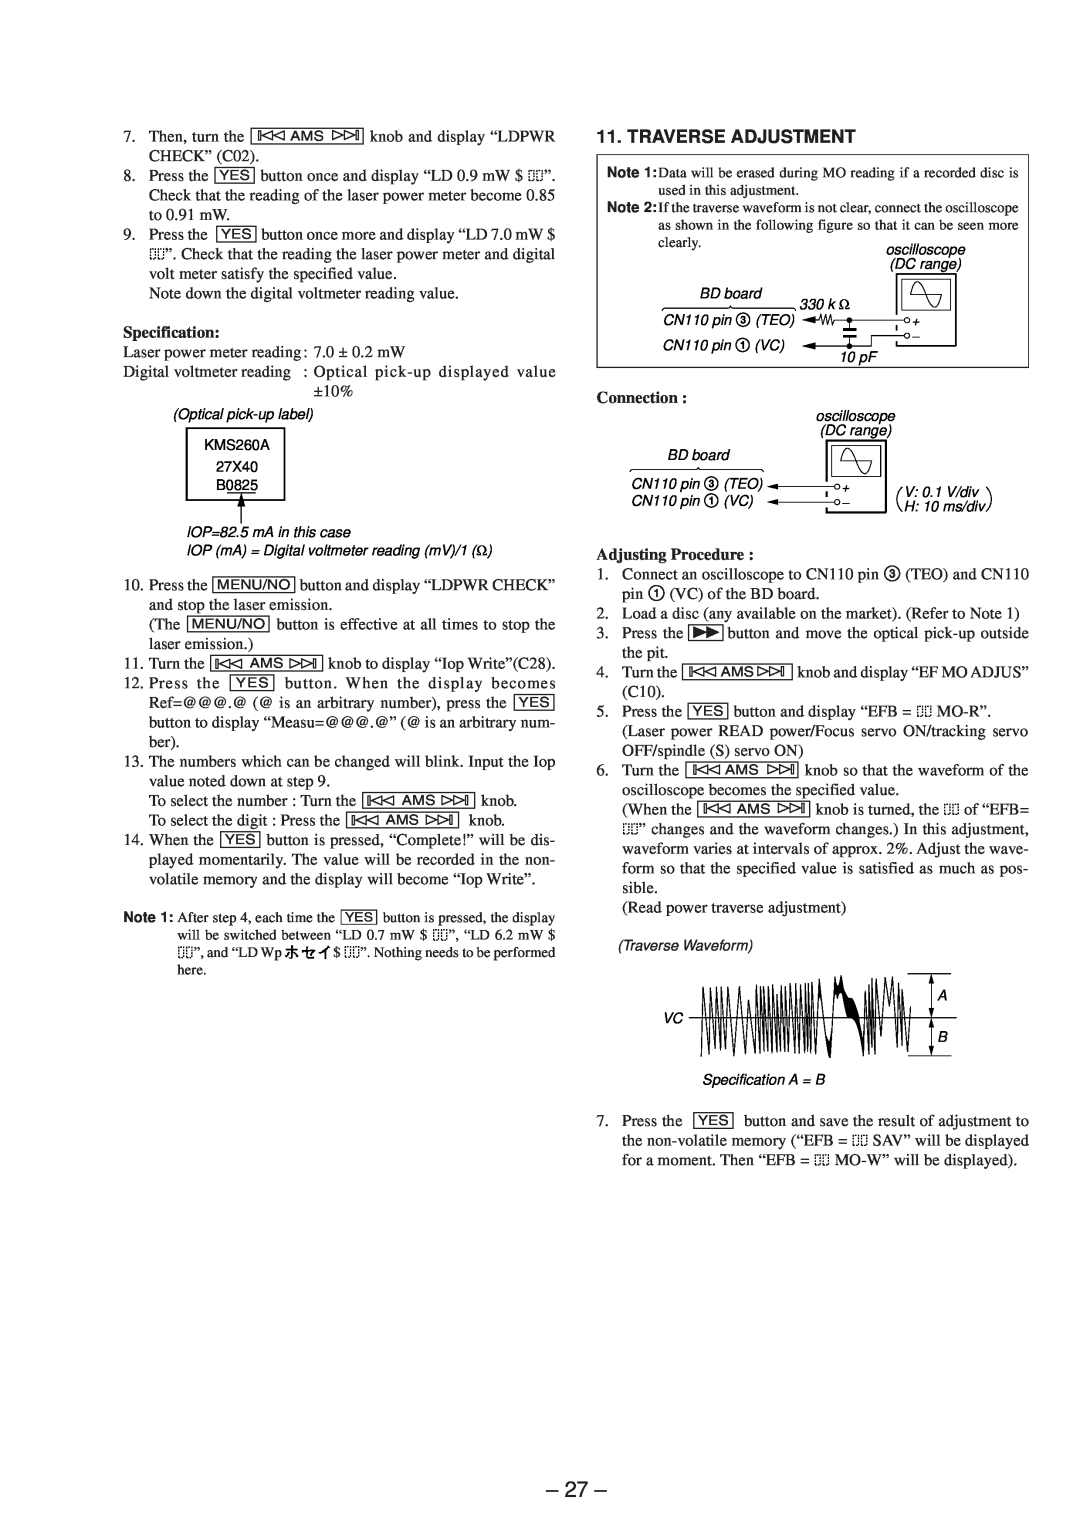 Sony MDS-JE530 service manual 27, Traverse Adjustment, Specification, Connection, Adjusting Procedure 